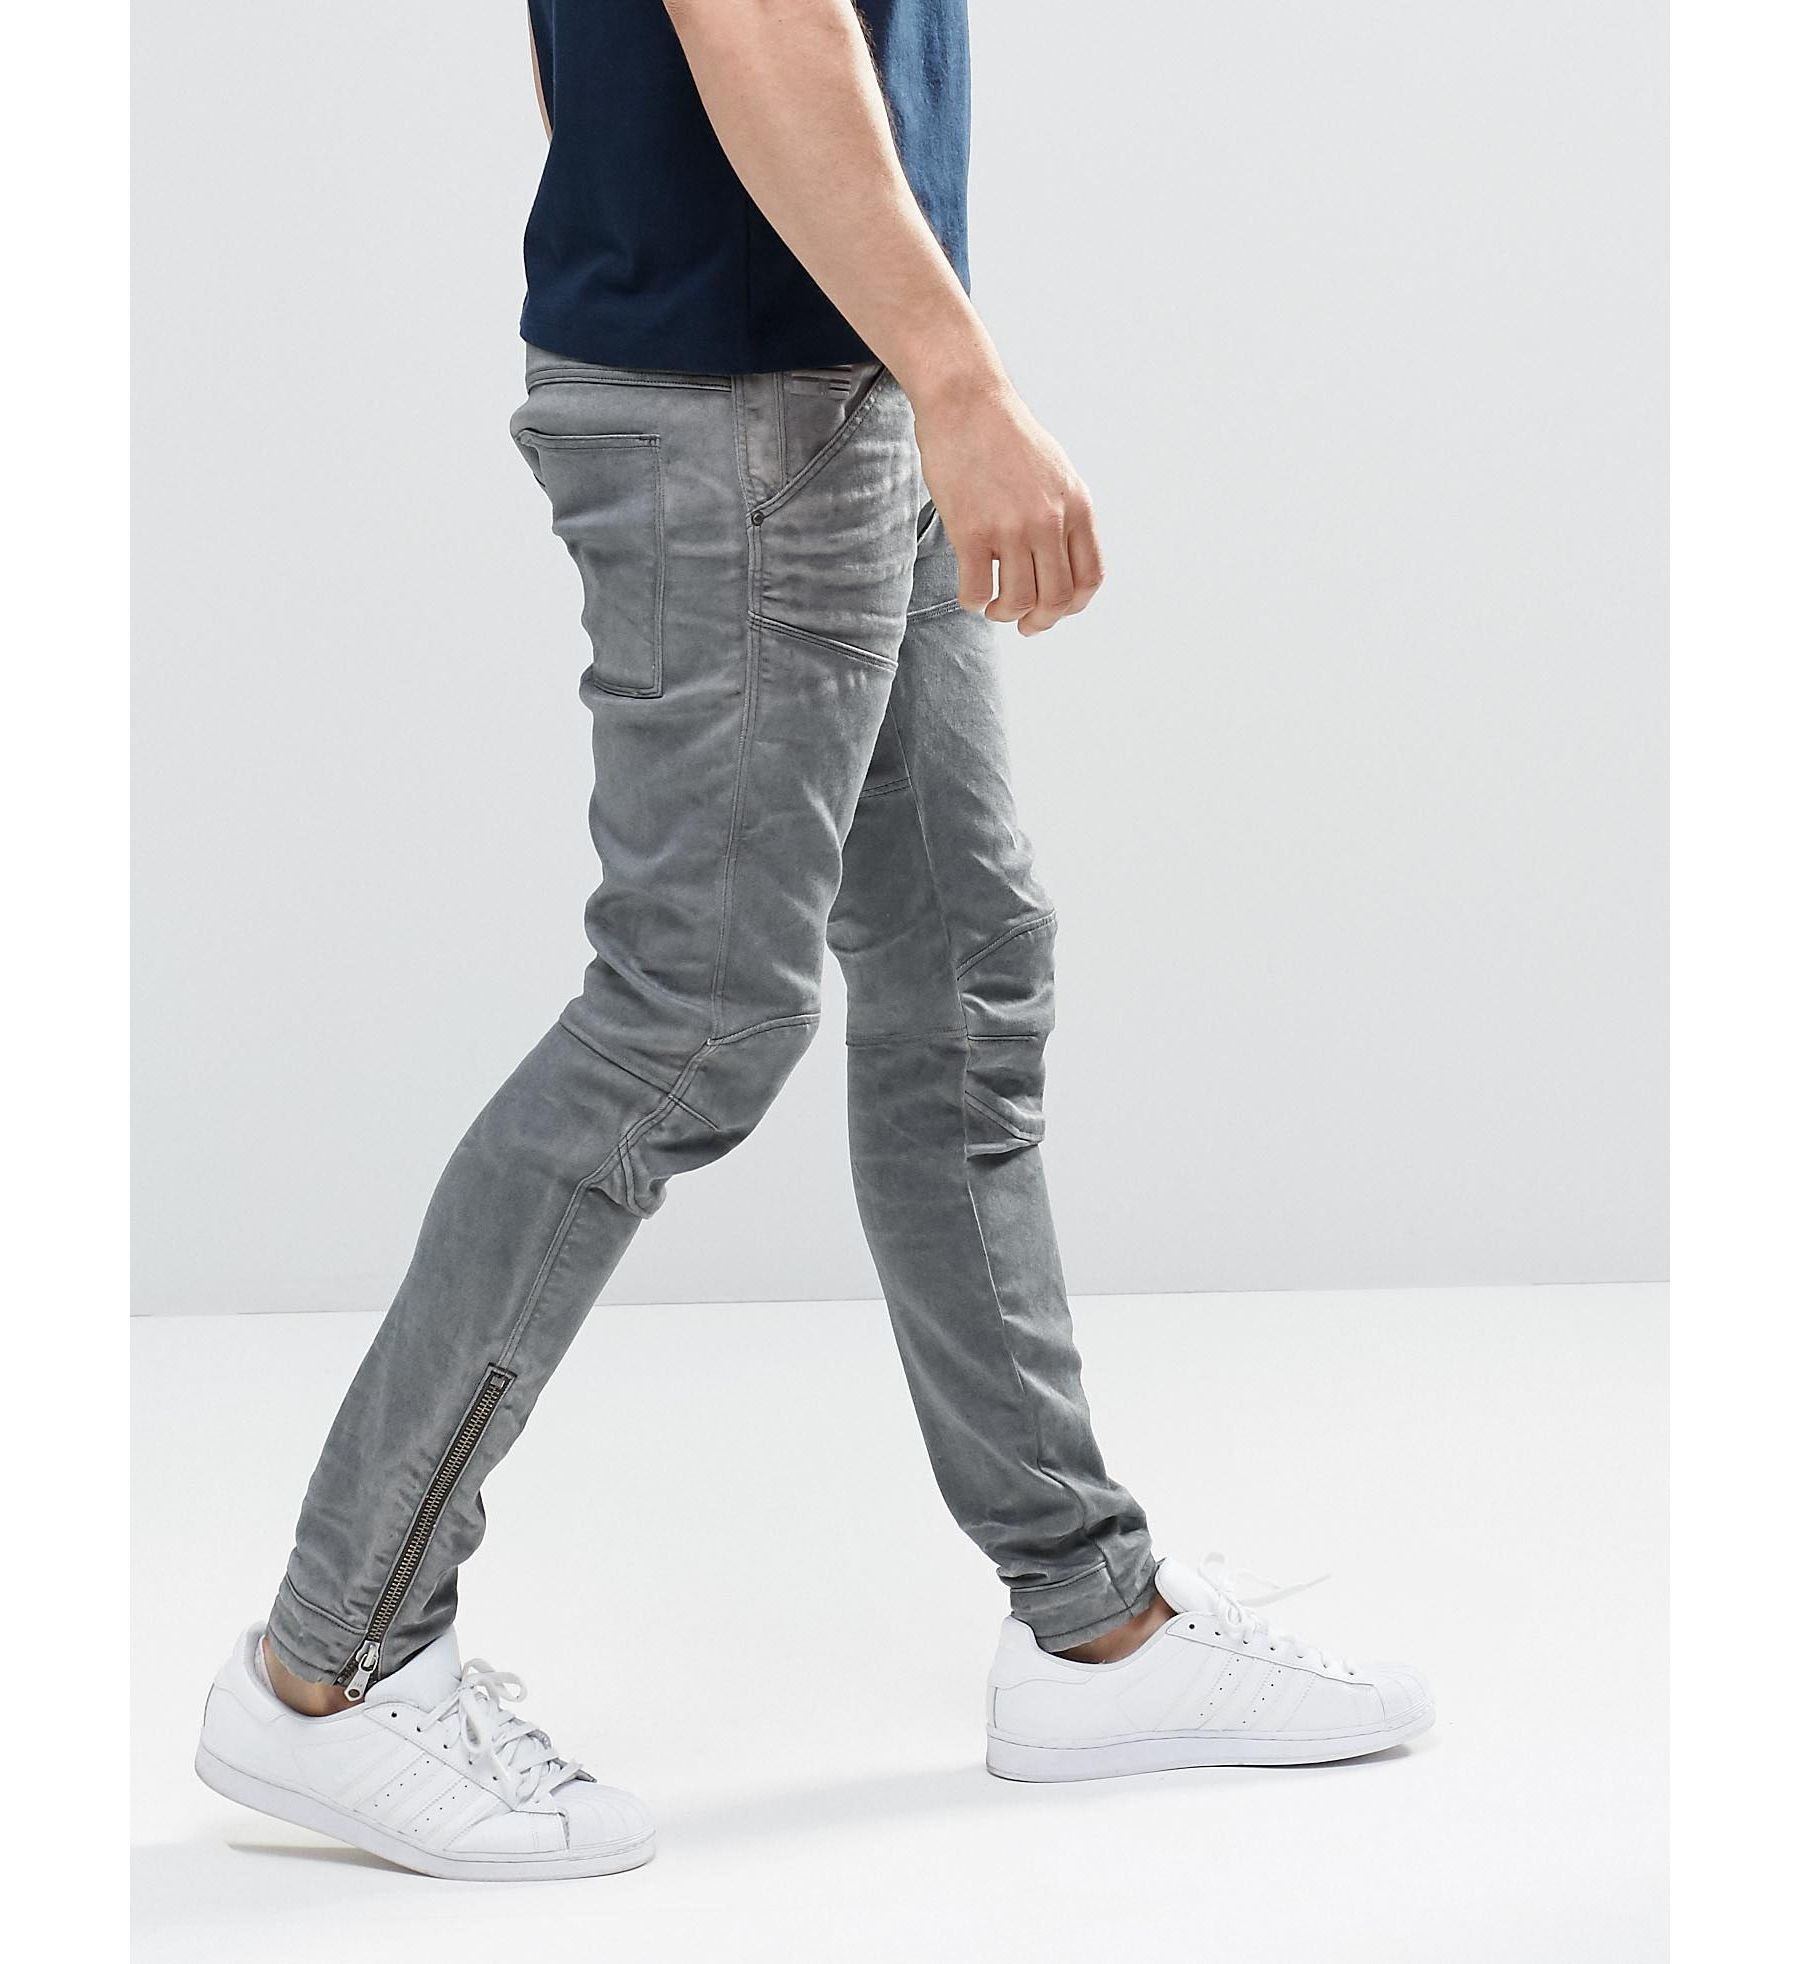 G-Star RAW 5620 3d Ankle Zip Super Slim Jeans for Men